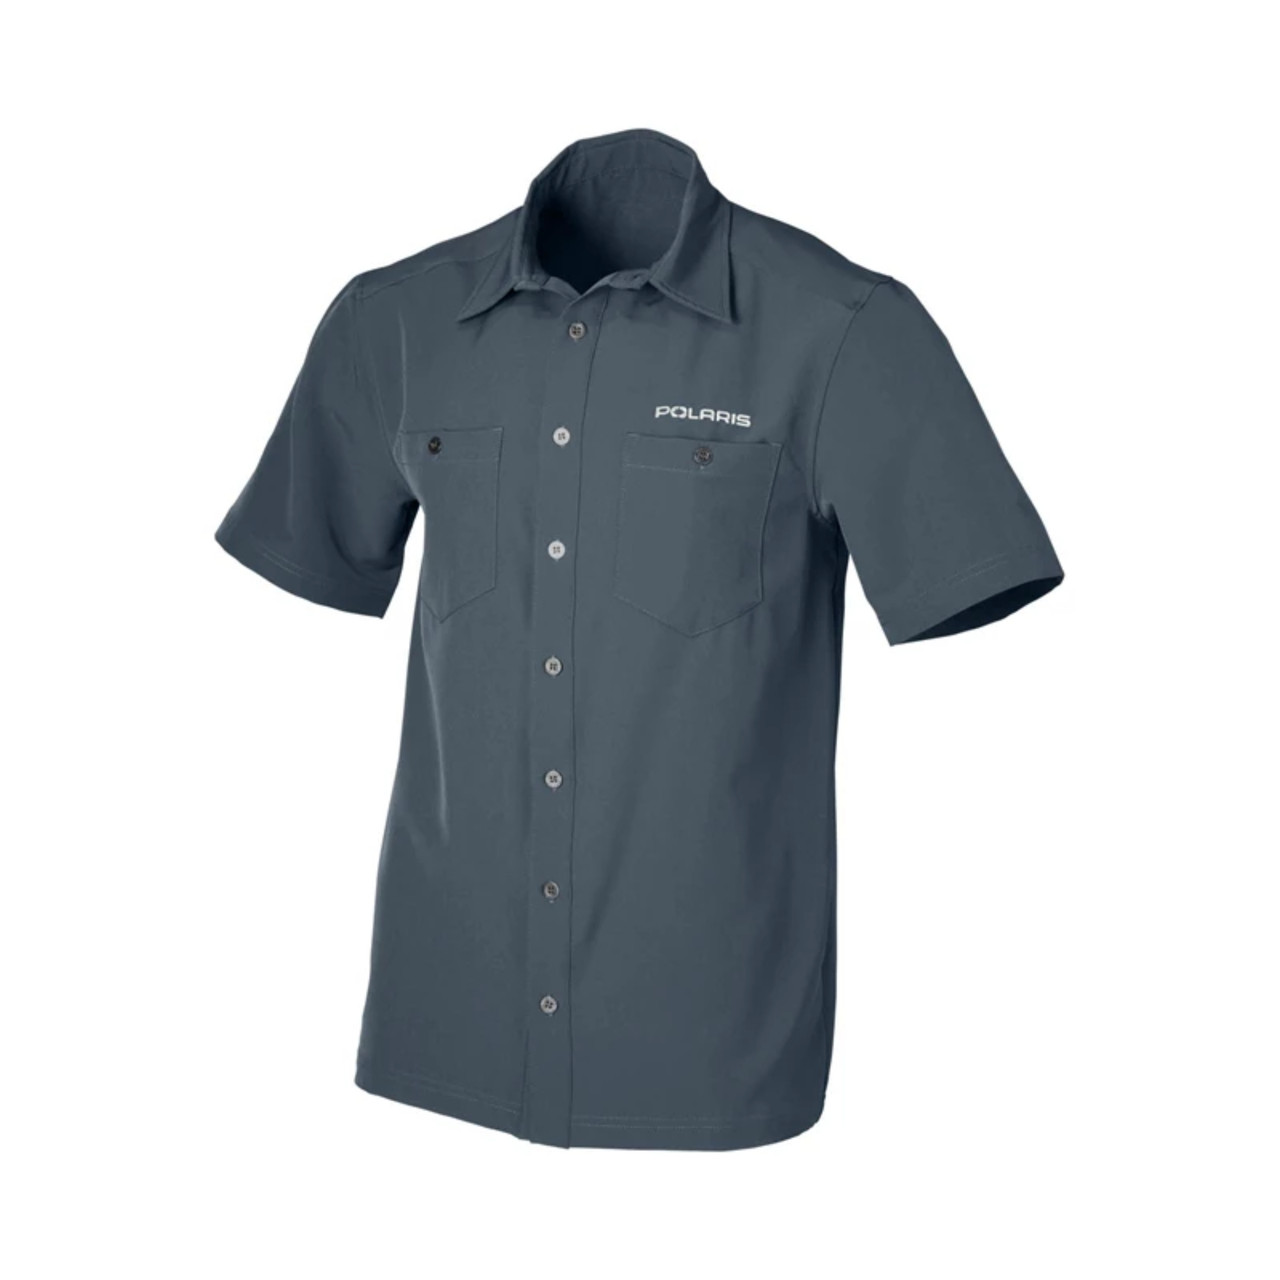 Polaris New OEM Pit Shirt, Men's Medium, 283304303